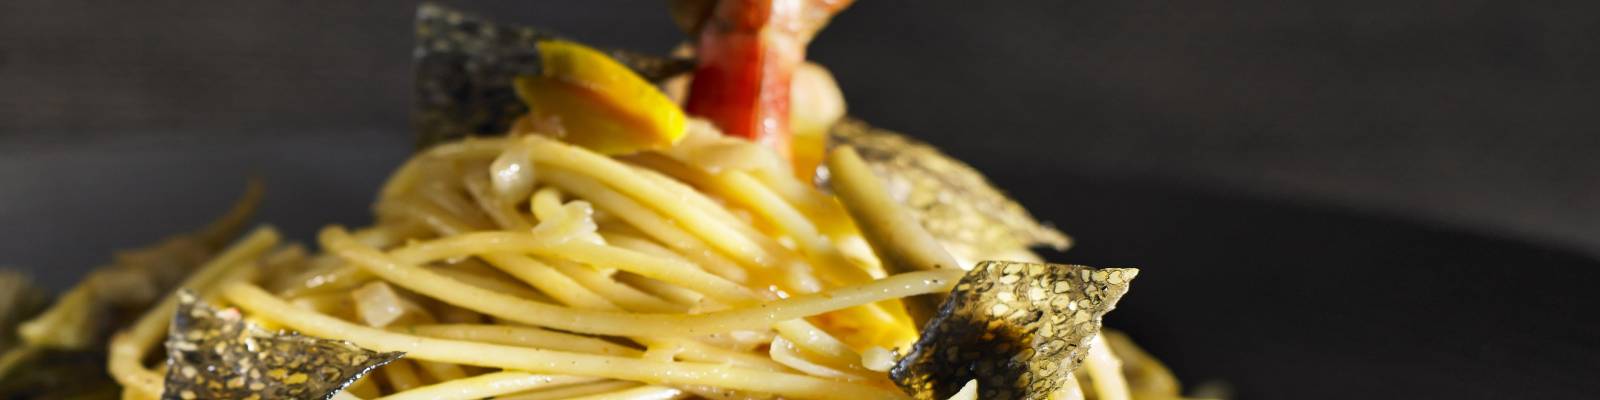 Pasta Garofalo - Spaghetti, gambas et pétales de caviar